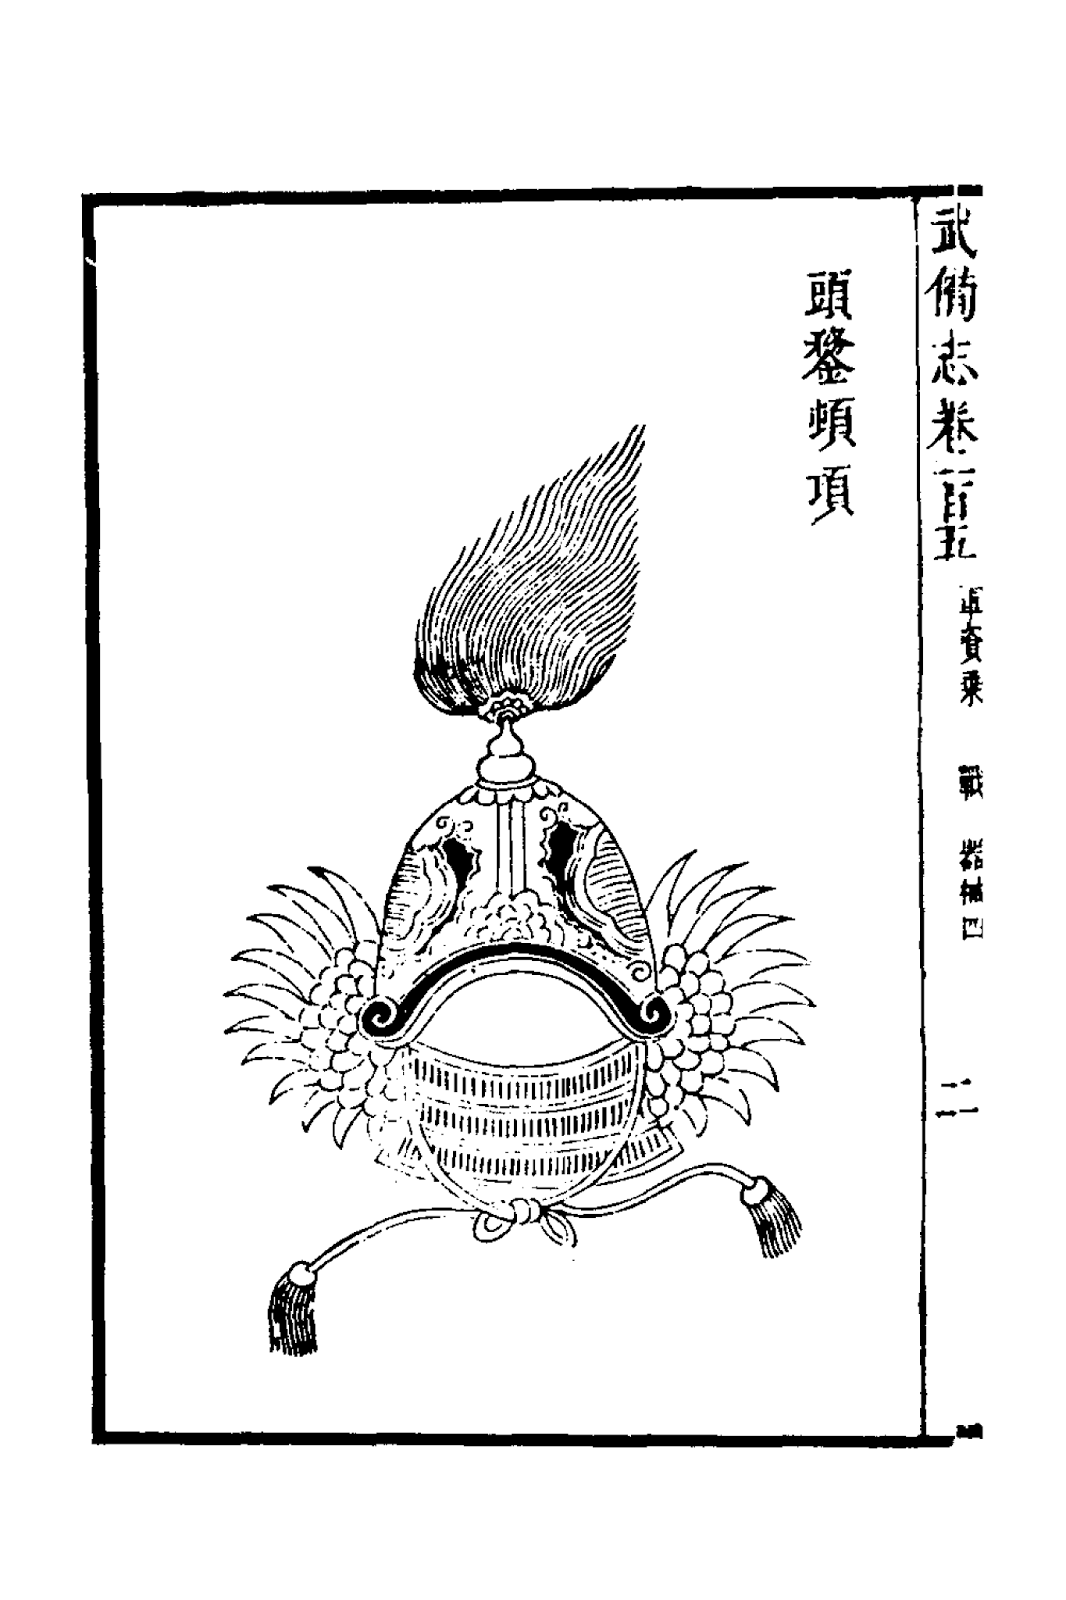 Ming Chinese Helmet